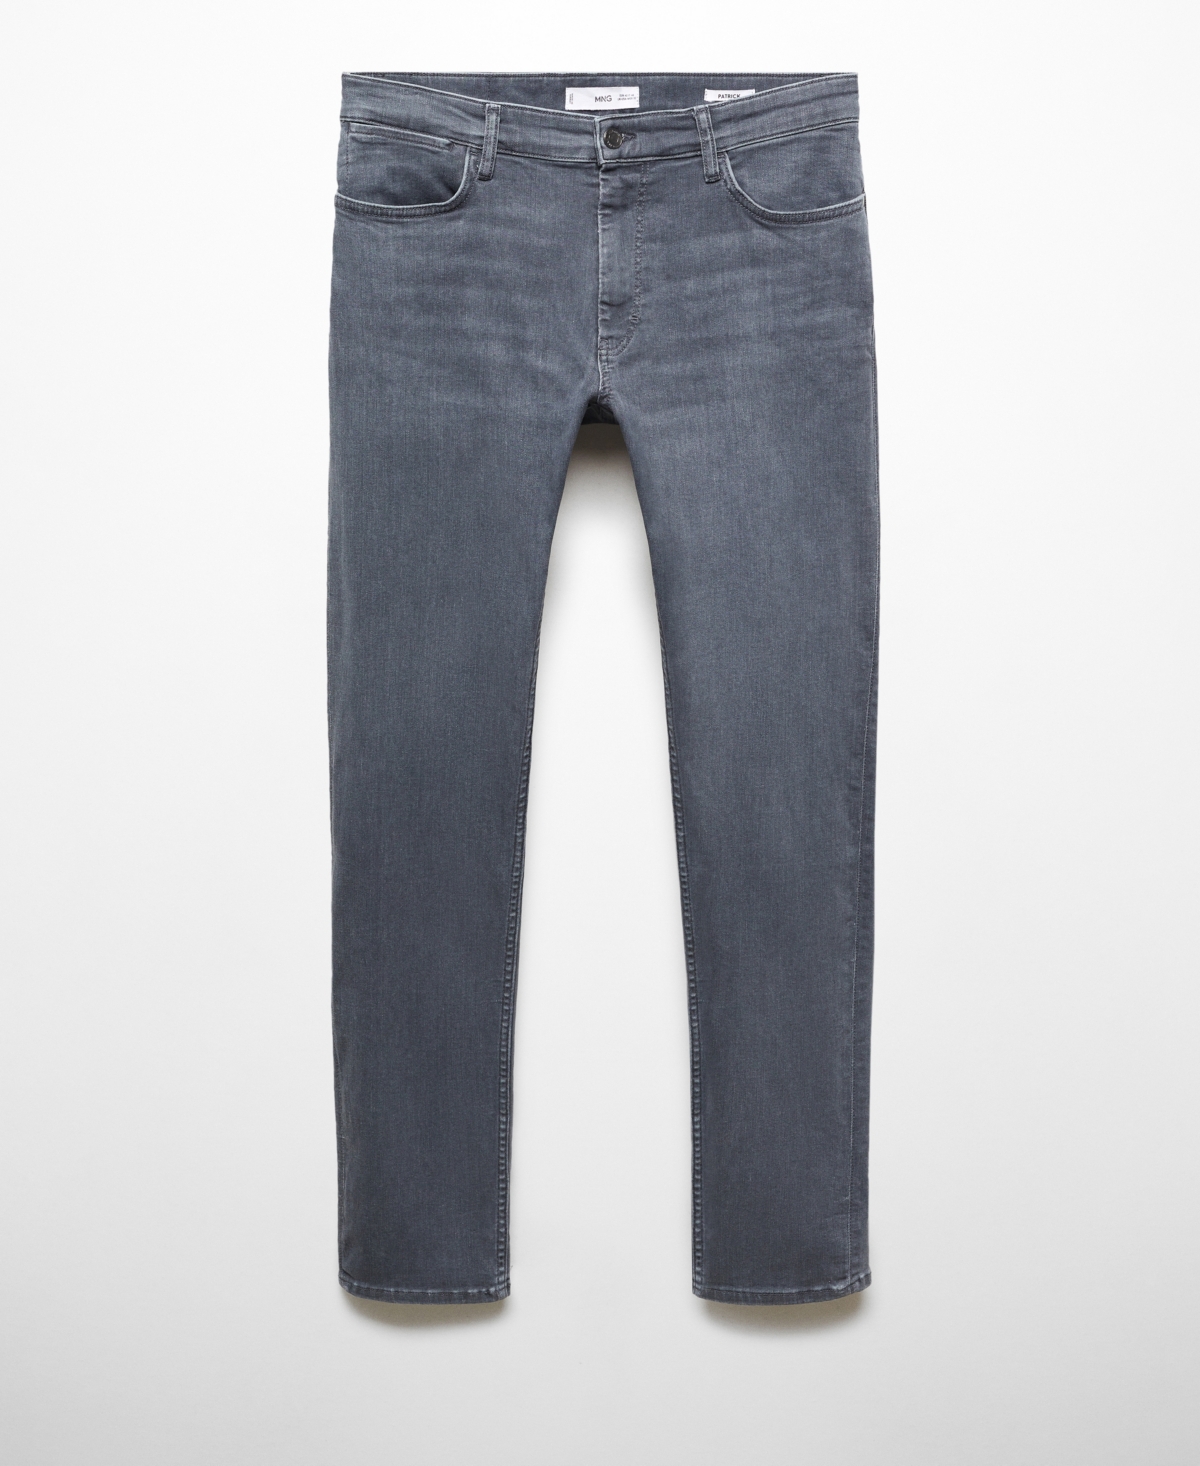 Mango Men's Slim Fit Ultra Soft Touch Patrick Jeans In Denim Grey